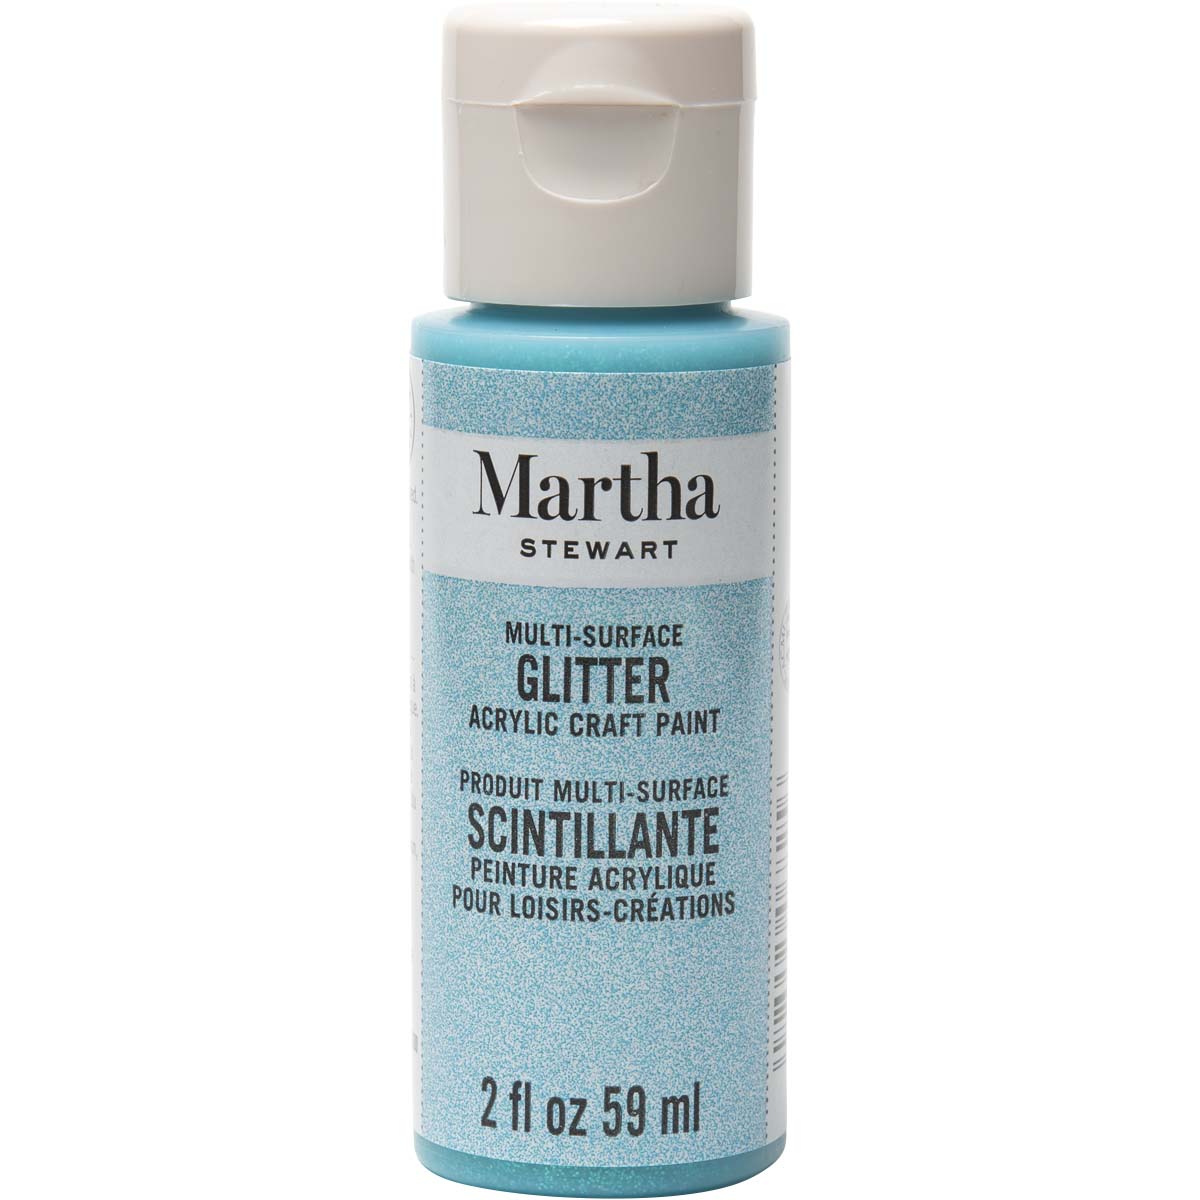 Martha Stewart ® Multi-Surface Glitter Acrylic Craft Paint - Blueberry Slush, 2 oz. - 32146CA